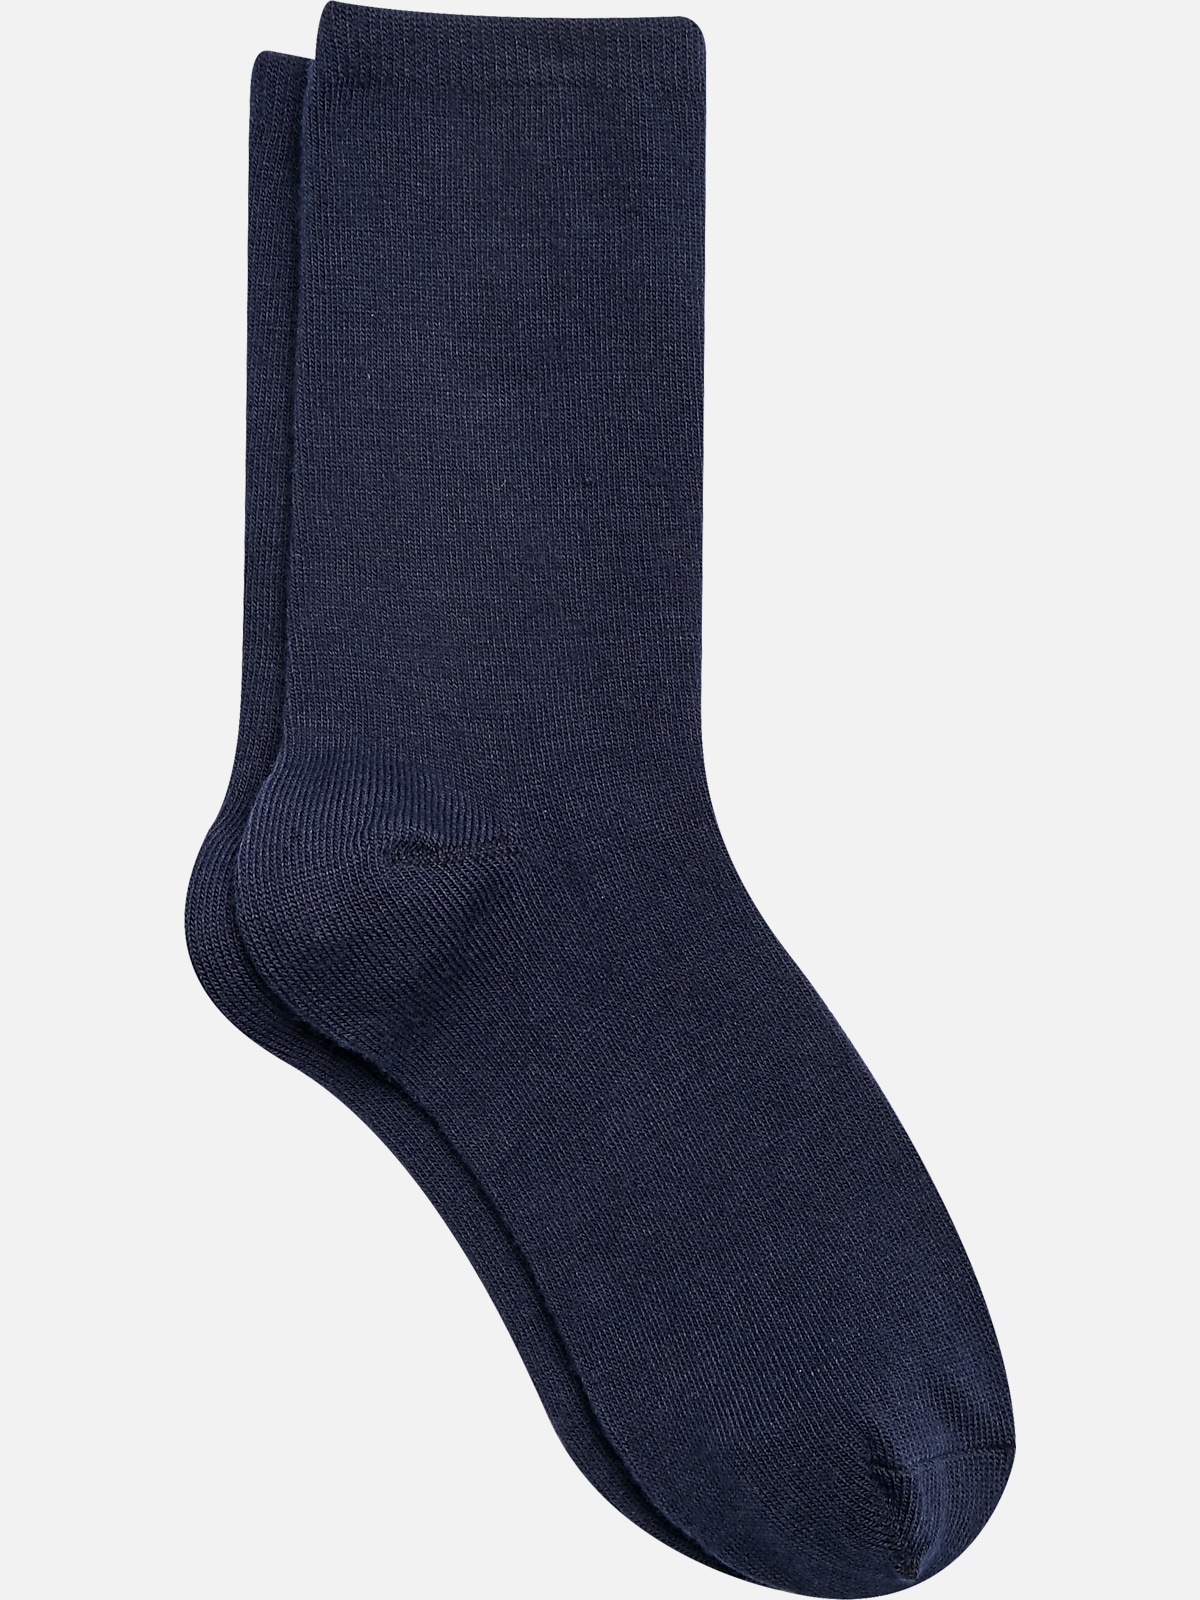 Egara Boys Socks | All Clearance $39.99| Men's Wearhouse